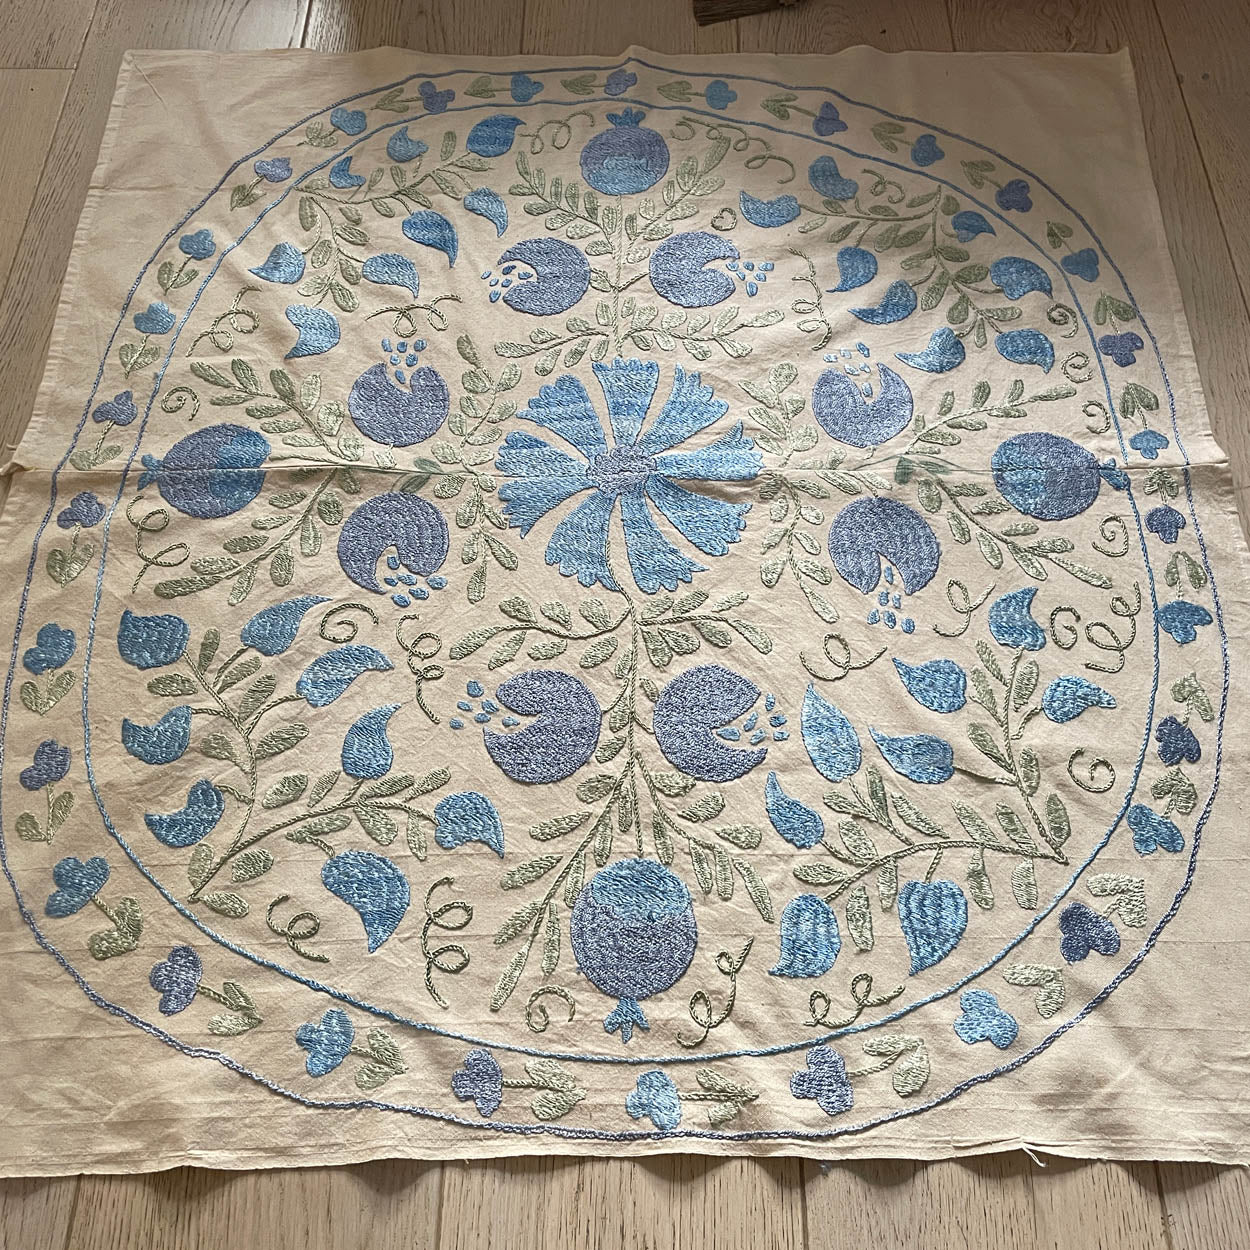 Uzbeki Suzani Hand Embroidered Textile Wall Hanging | Home Décor | Runner | 95cm x 99cm SUZ220518018 - Wildash London